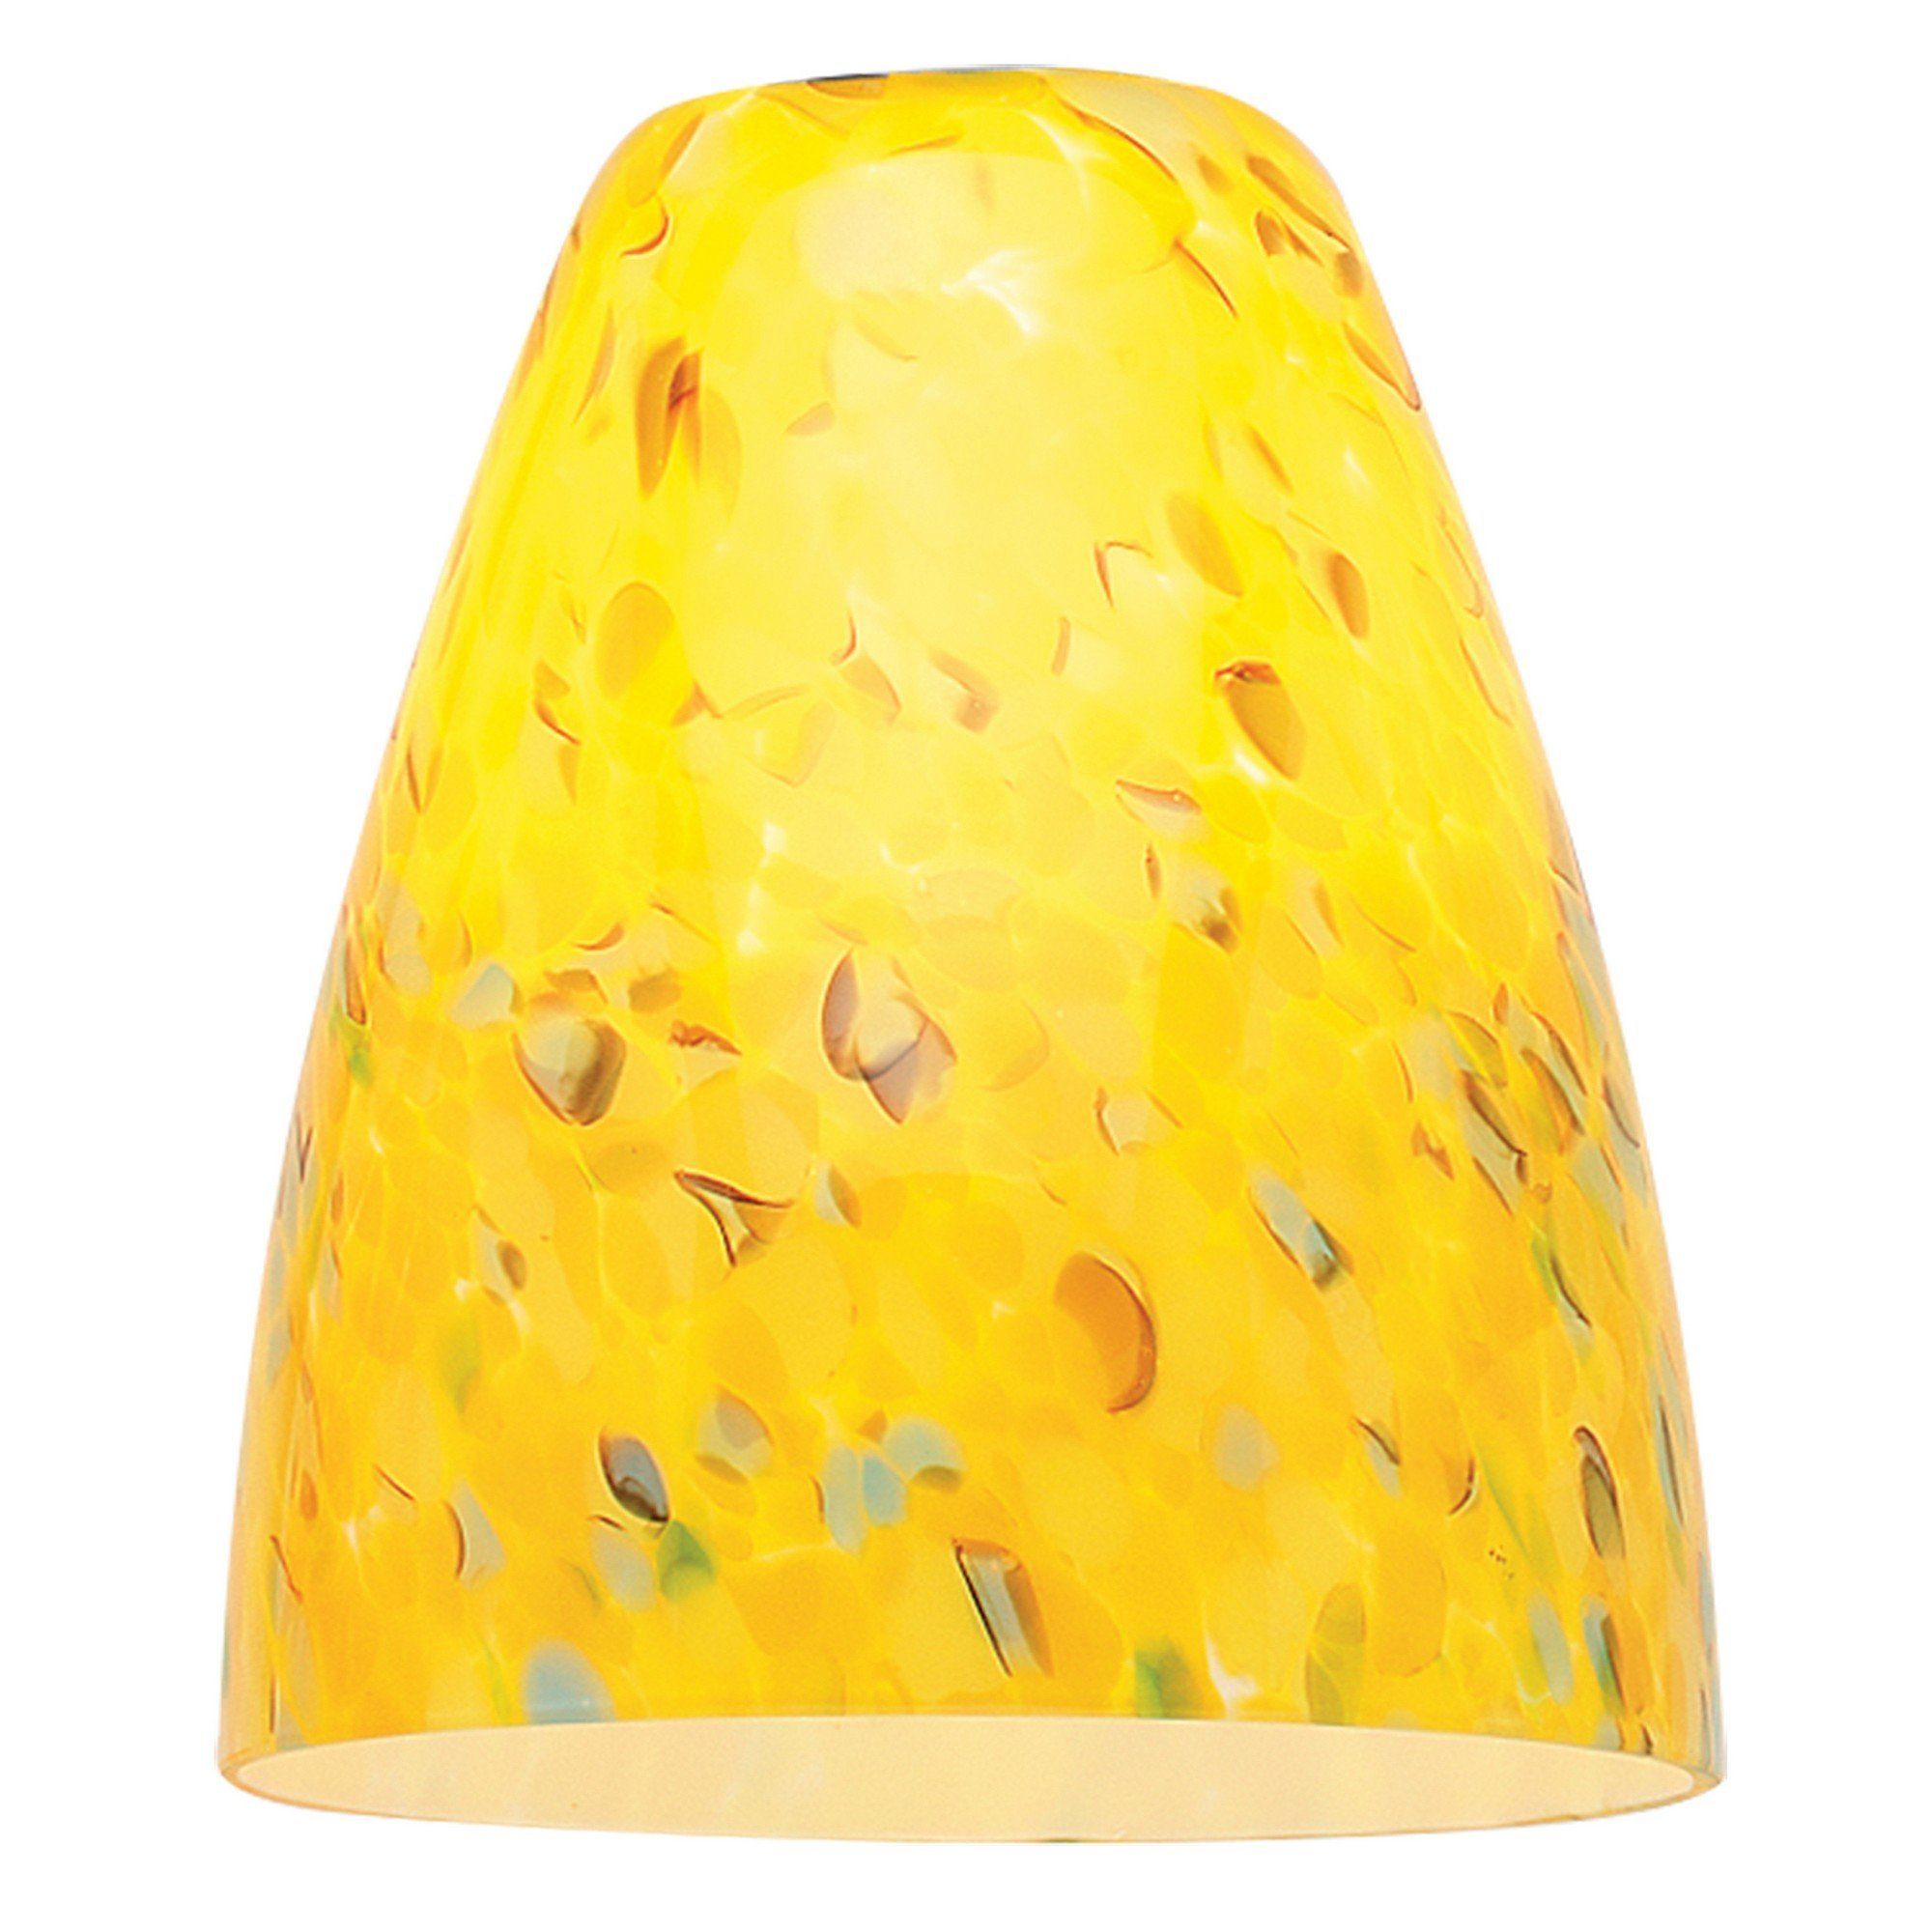 Fire Fire Glass - Yellow Ceiling Access Lighting 